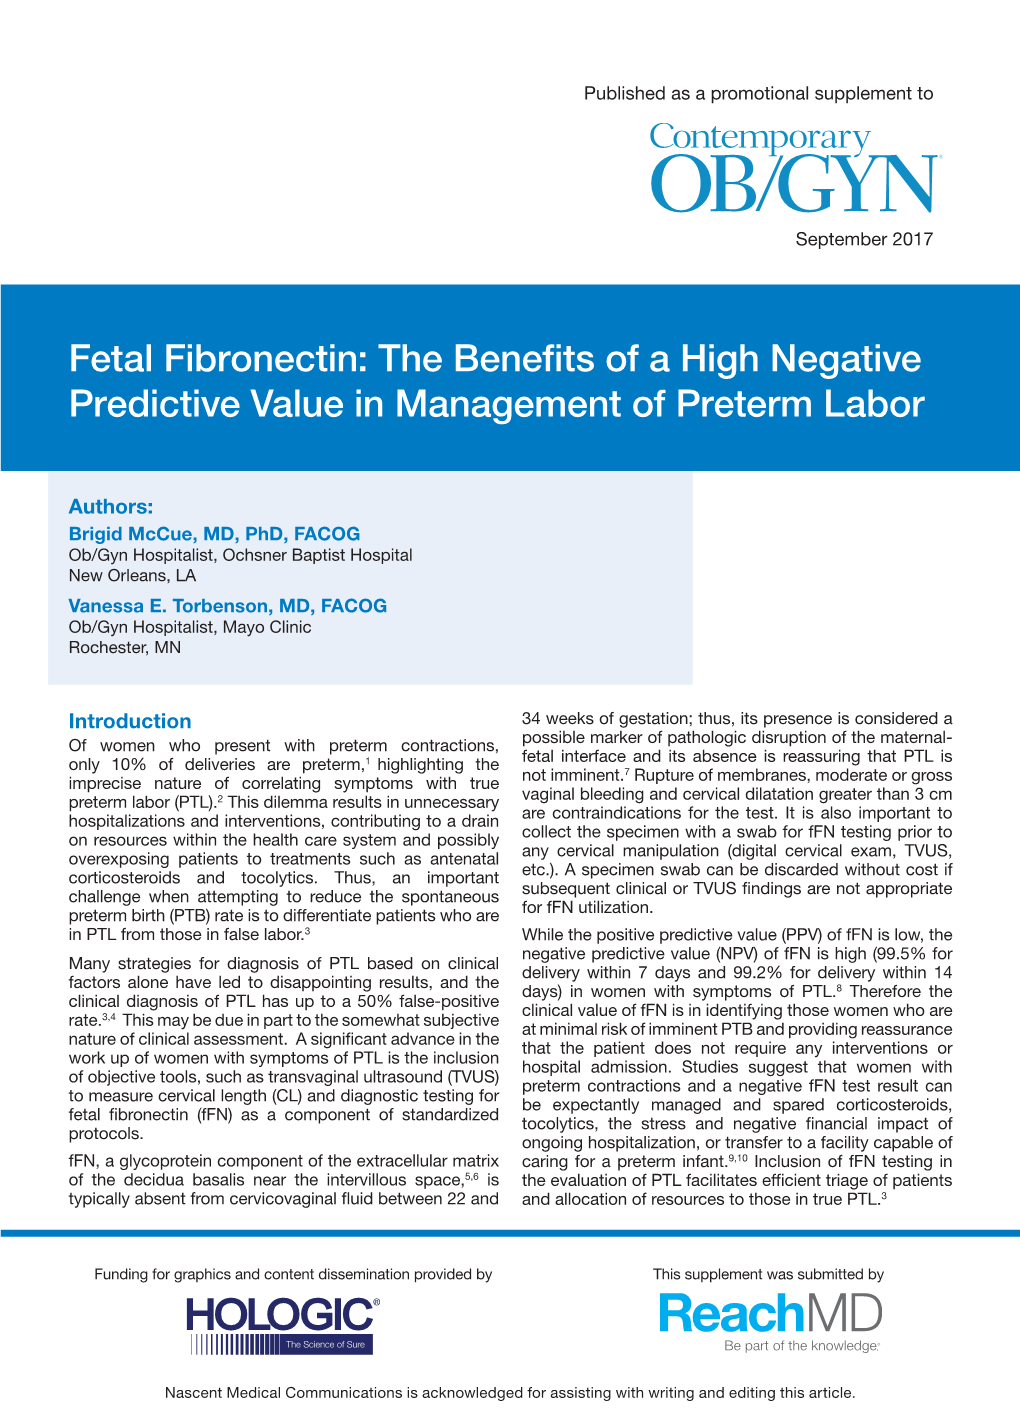 Fetal Fibronectin: the Benefits of a High Negative Predictive Value in Management of Preterm Labor